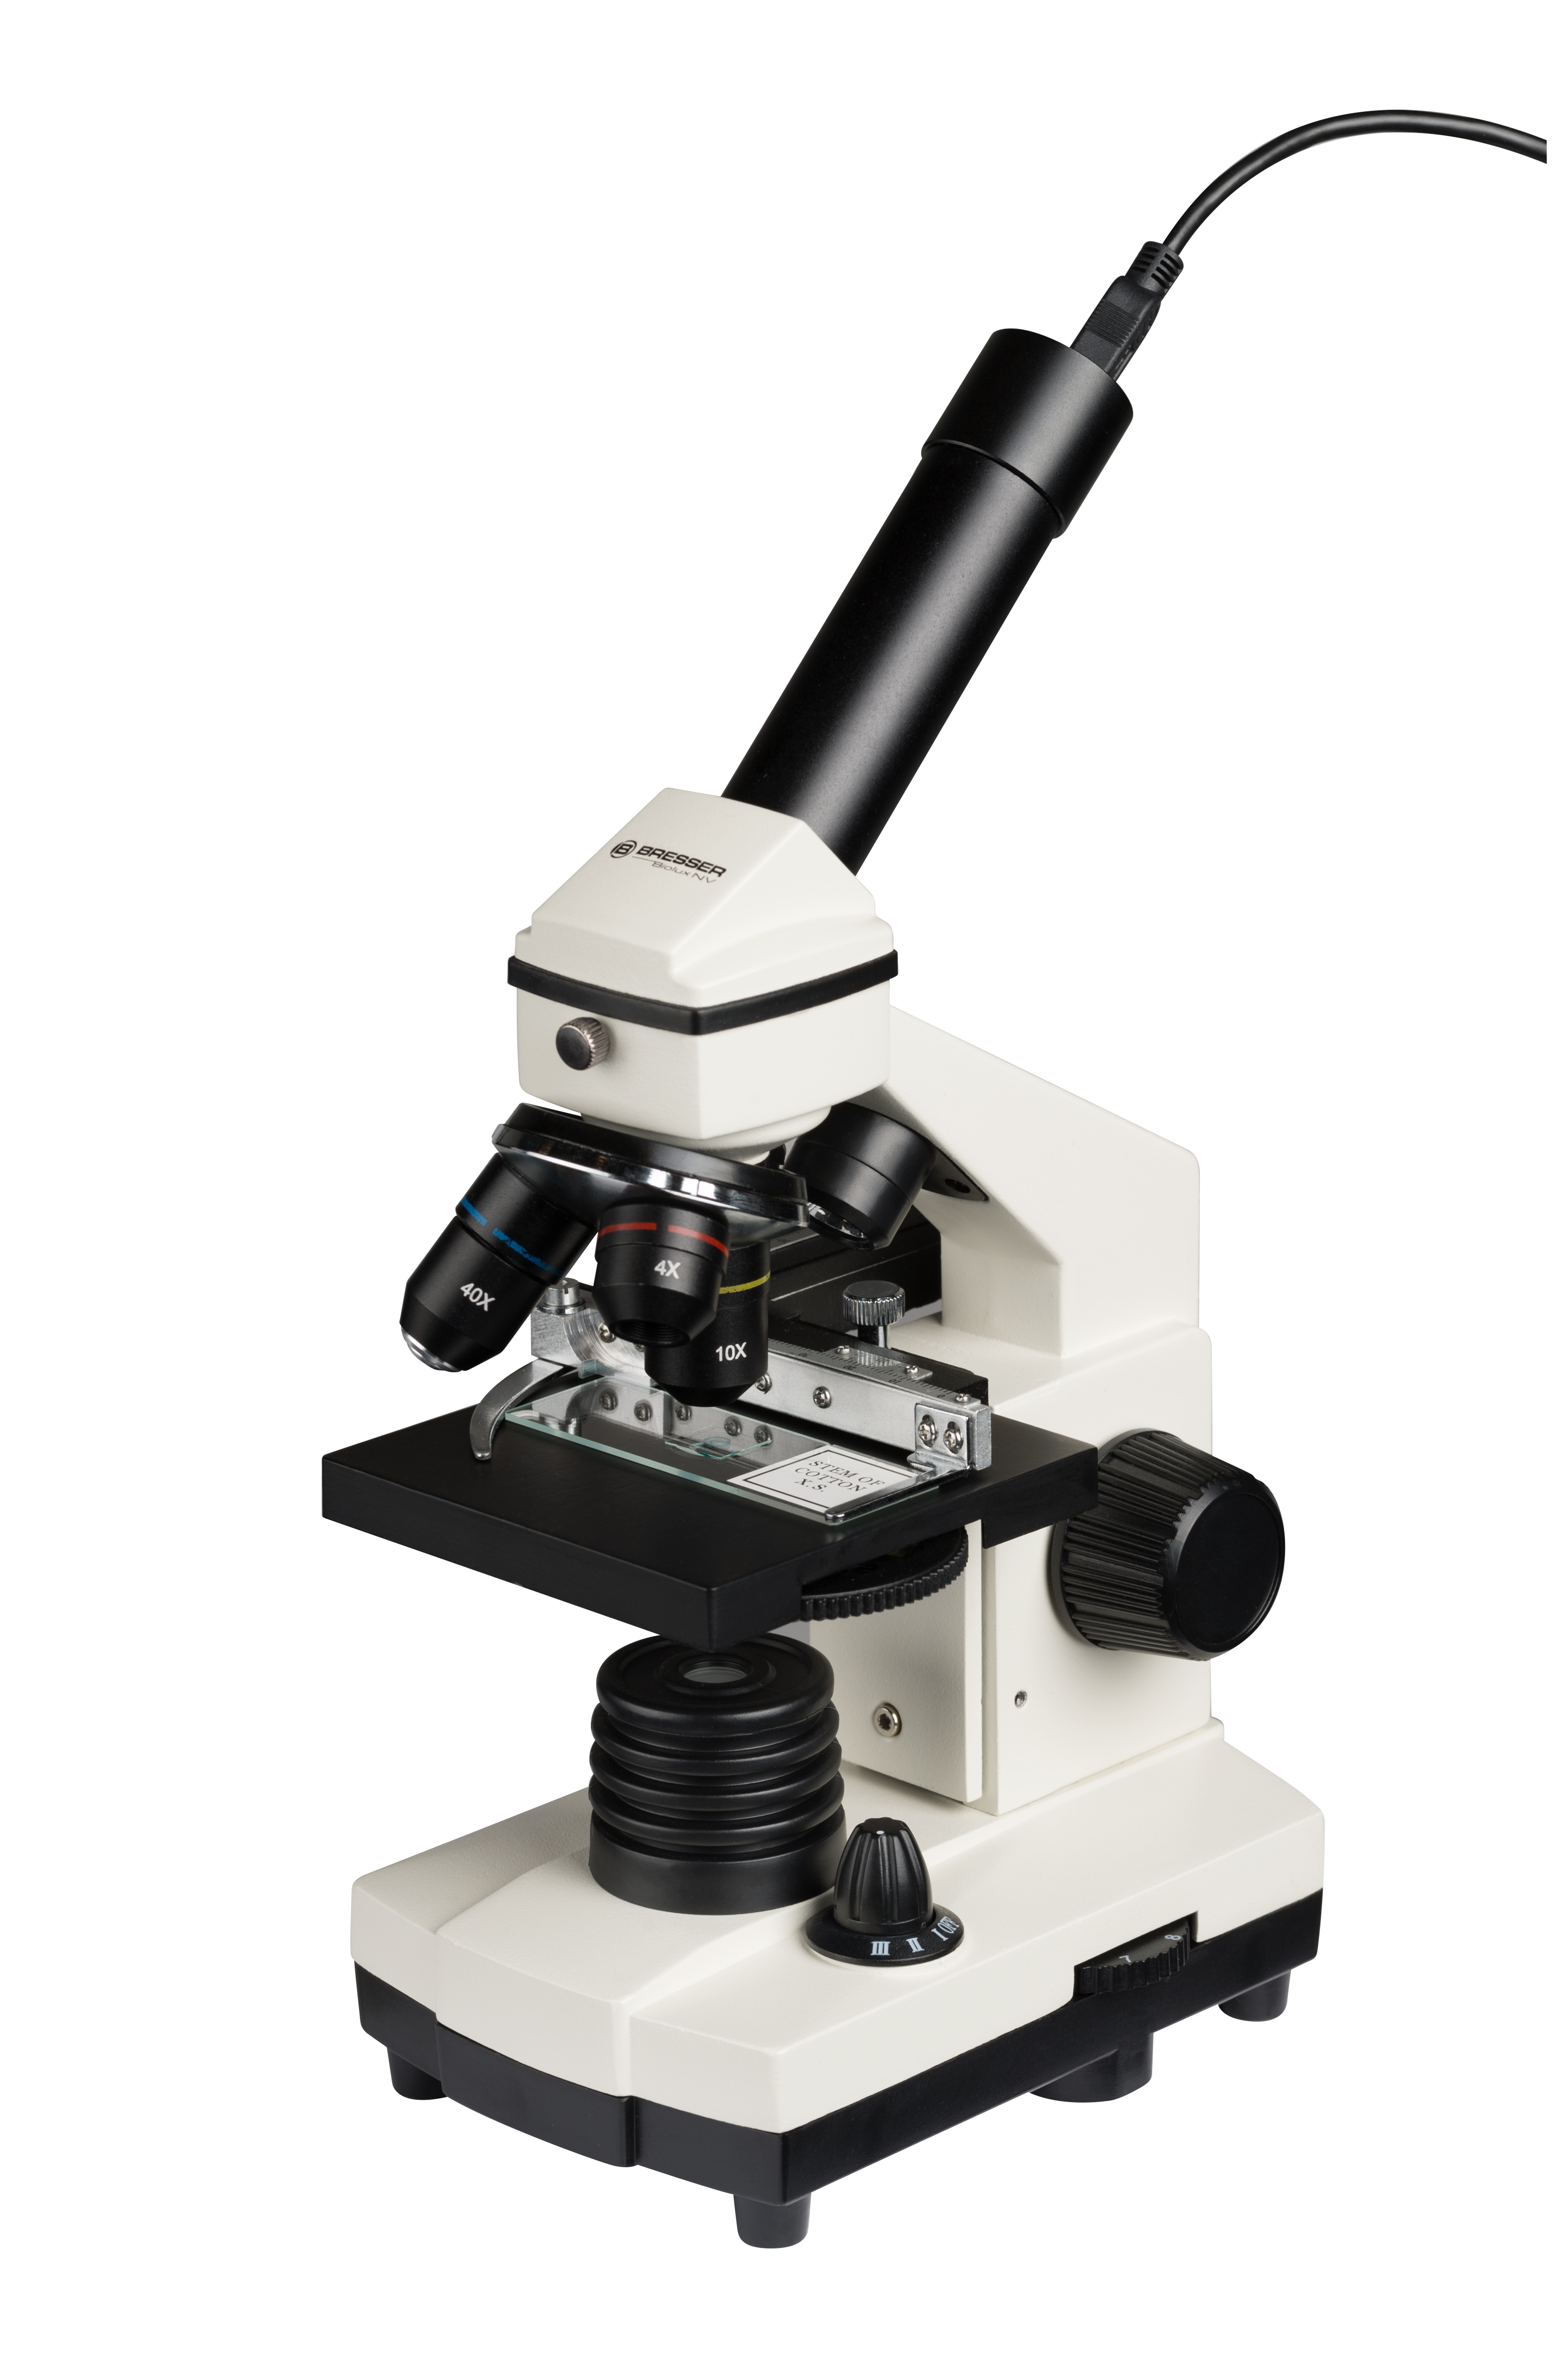 BRESSER Biolux NV 20x-1280x Microscope with HD USB camera | Bresser